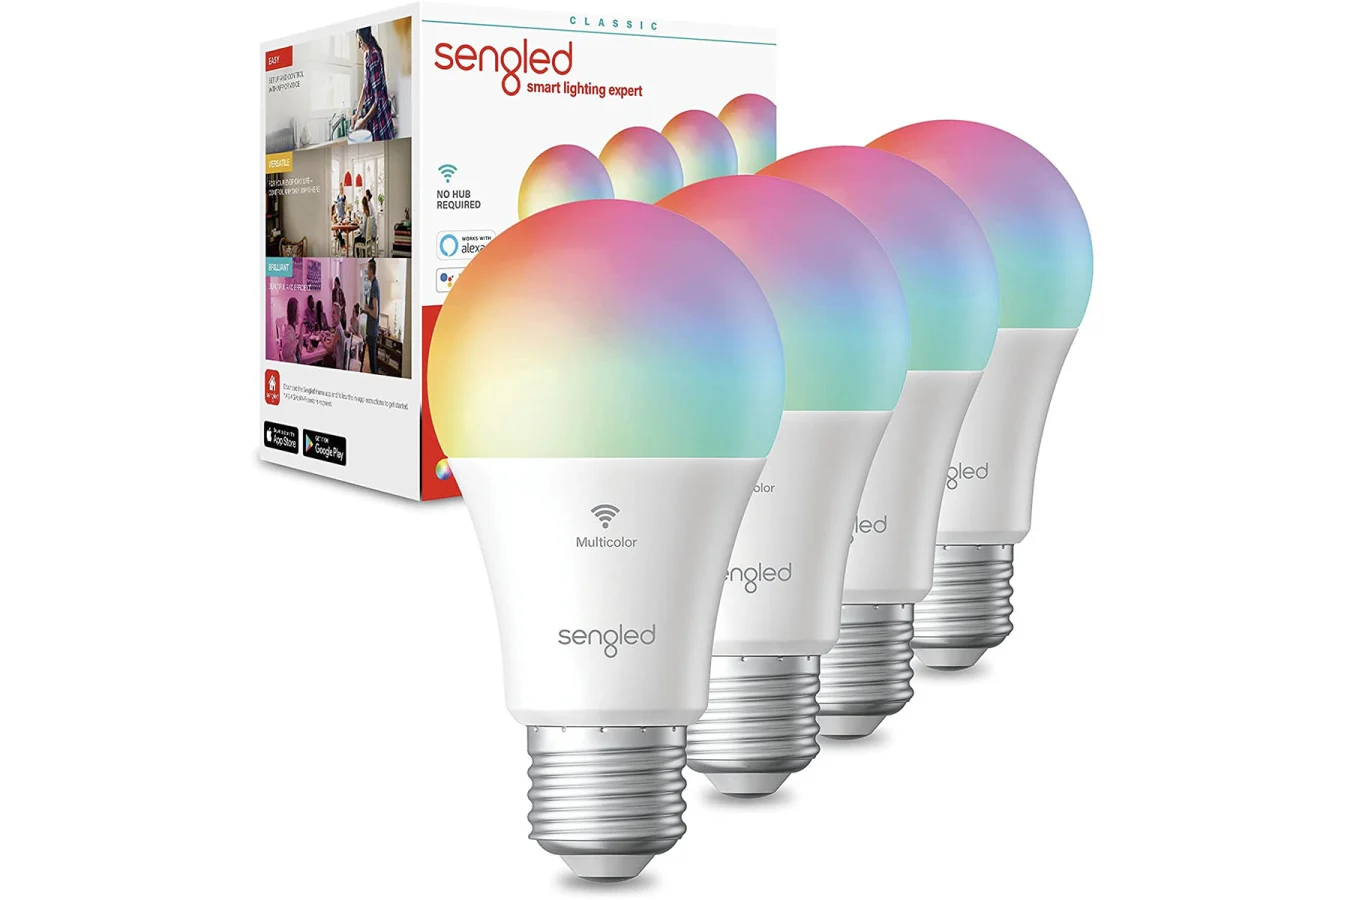 Four of Sengled's Smart Light Bulbs outside of their box against a white background.